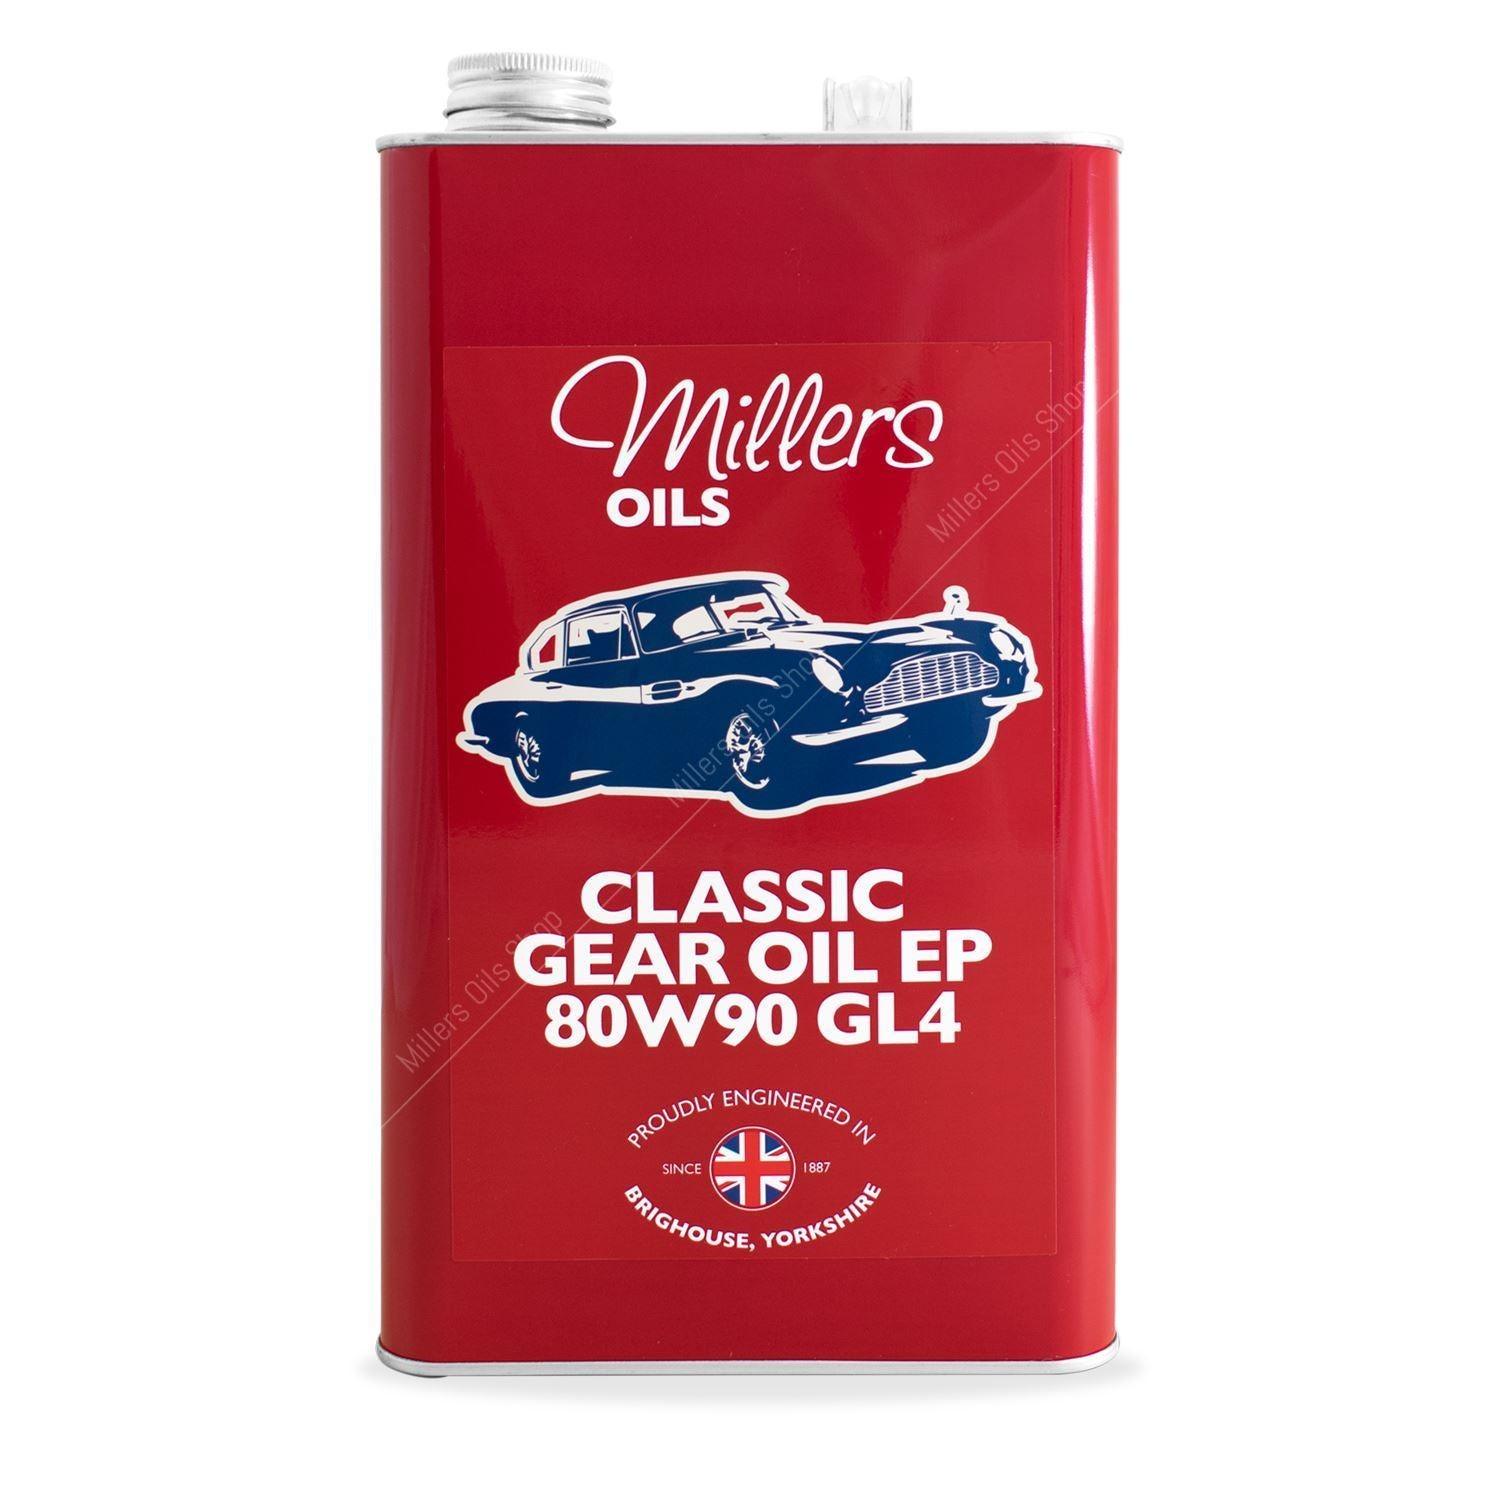 Classic Gear Oil EP 80w90 GL4 25 liter verpakking - Berry Smink British Car Parts